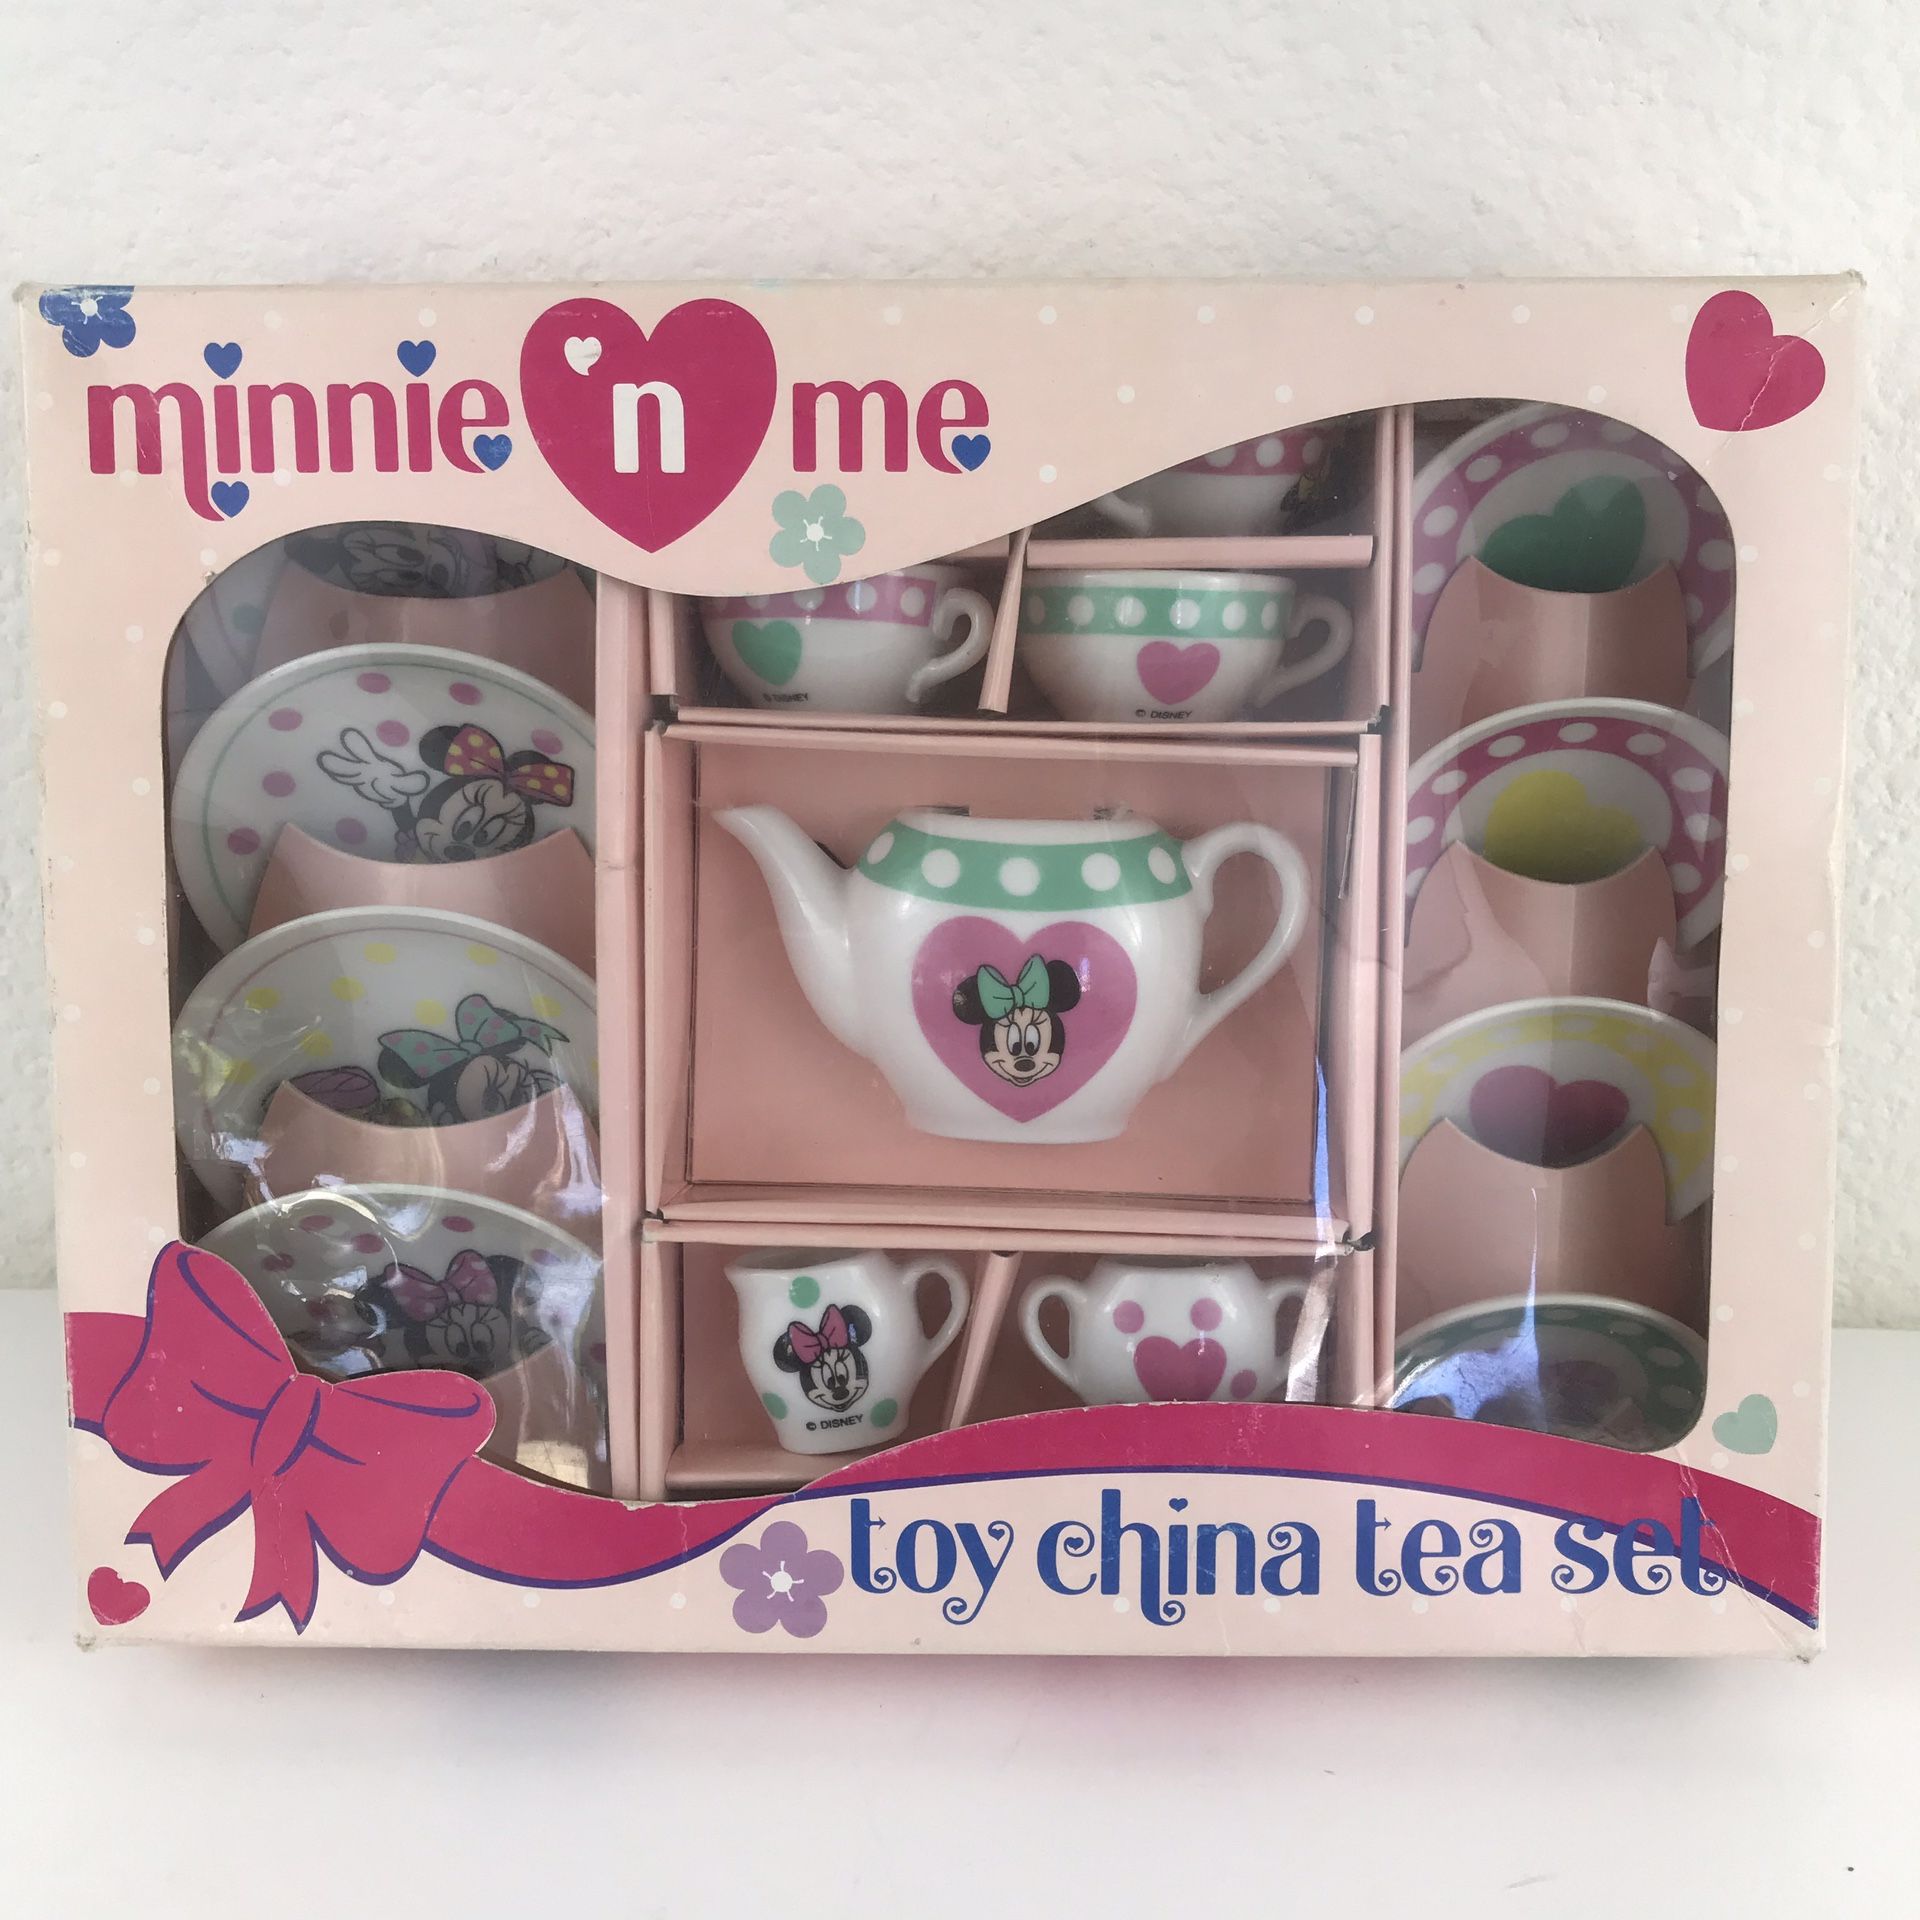 Minnie n me Disney Toy China Set 17 pieces 1990s